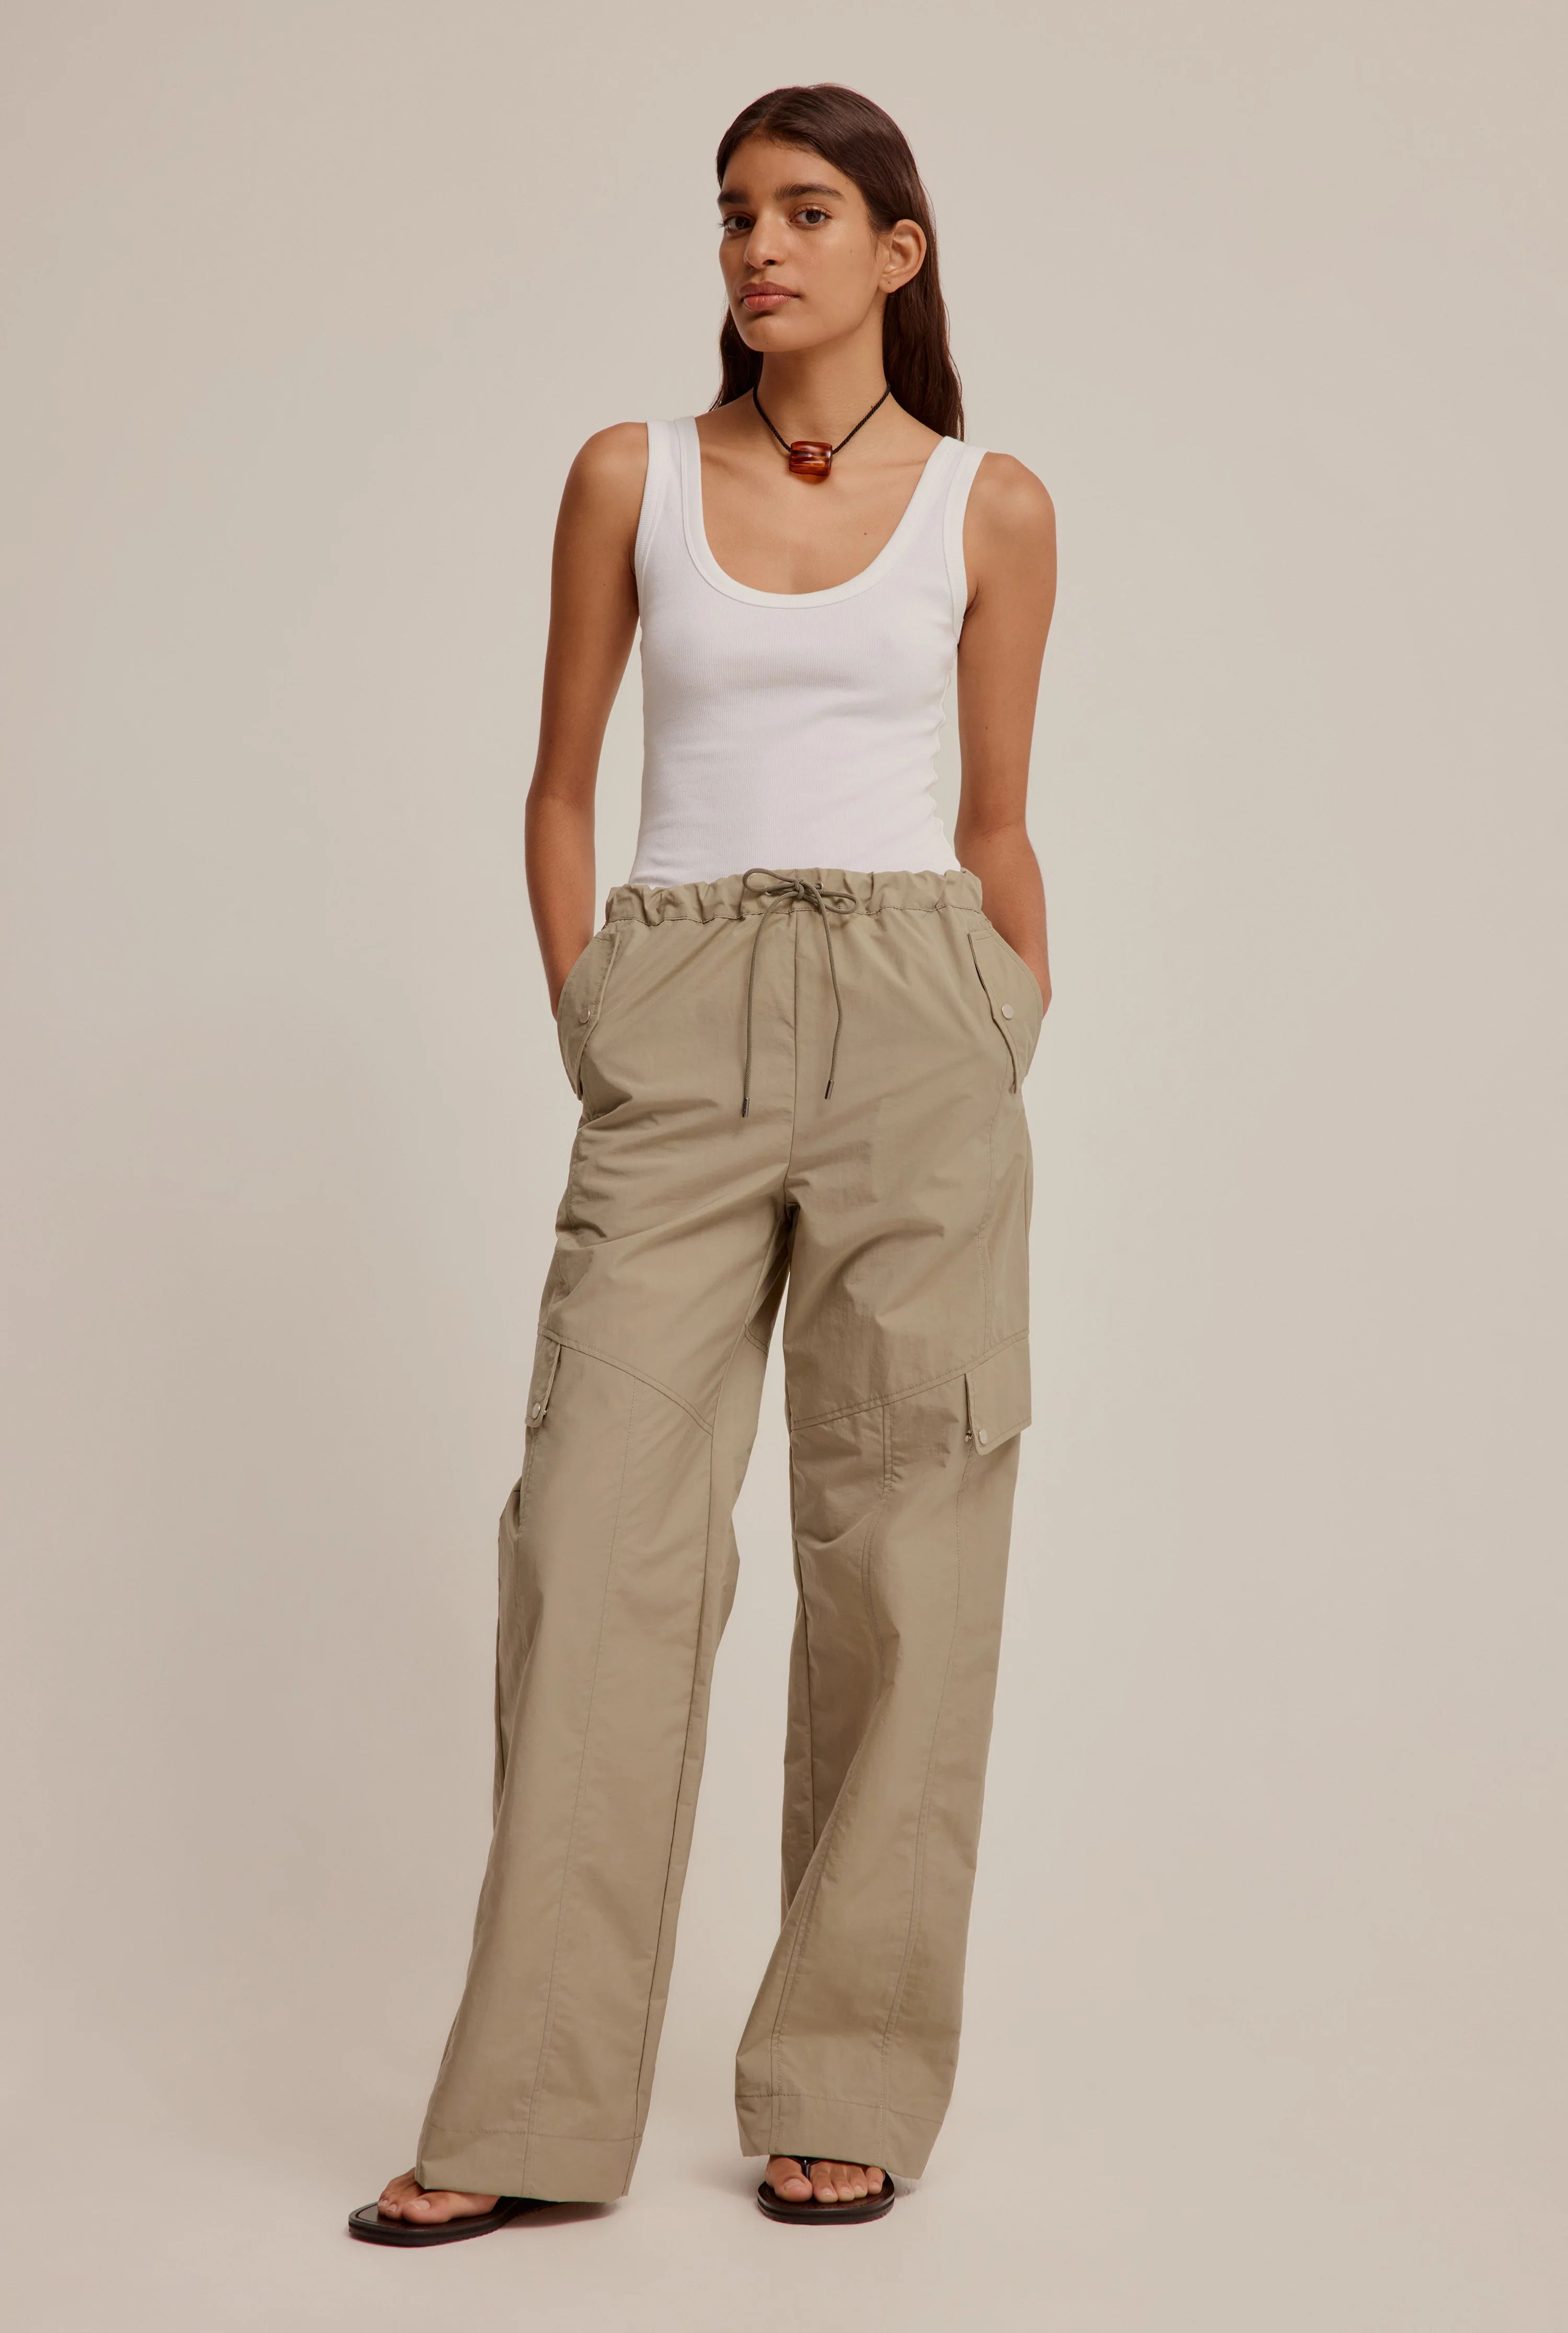 Venroy - Womens Womens Cotton Utility Pant in Pale Khaki | Venroy | Premium Leisurewear designed ... | Venroy AU